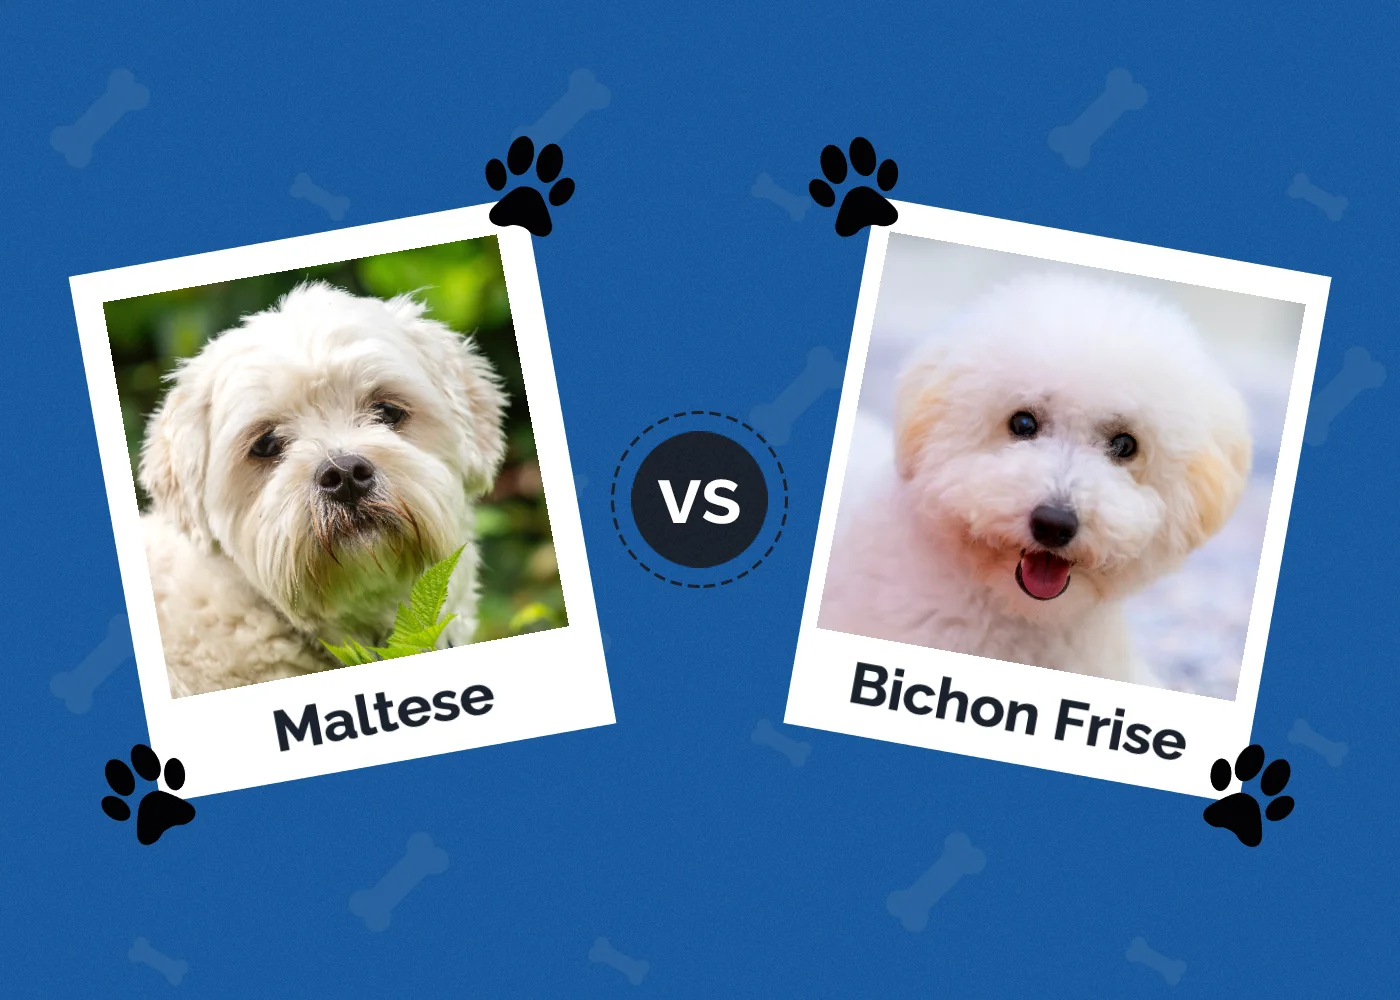 Maltese vs Bichon Frise - Featured Image